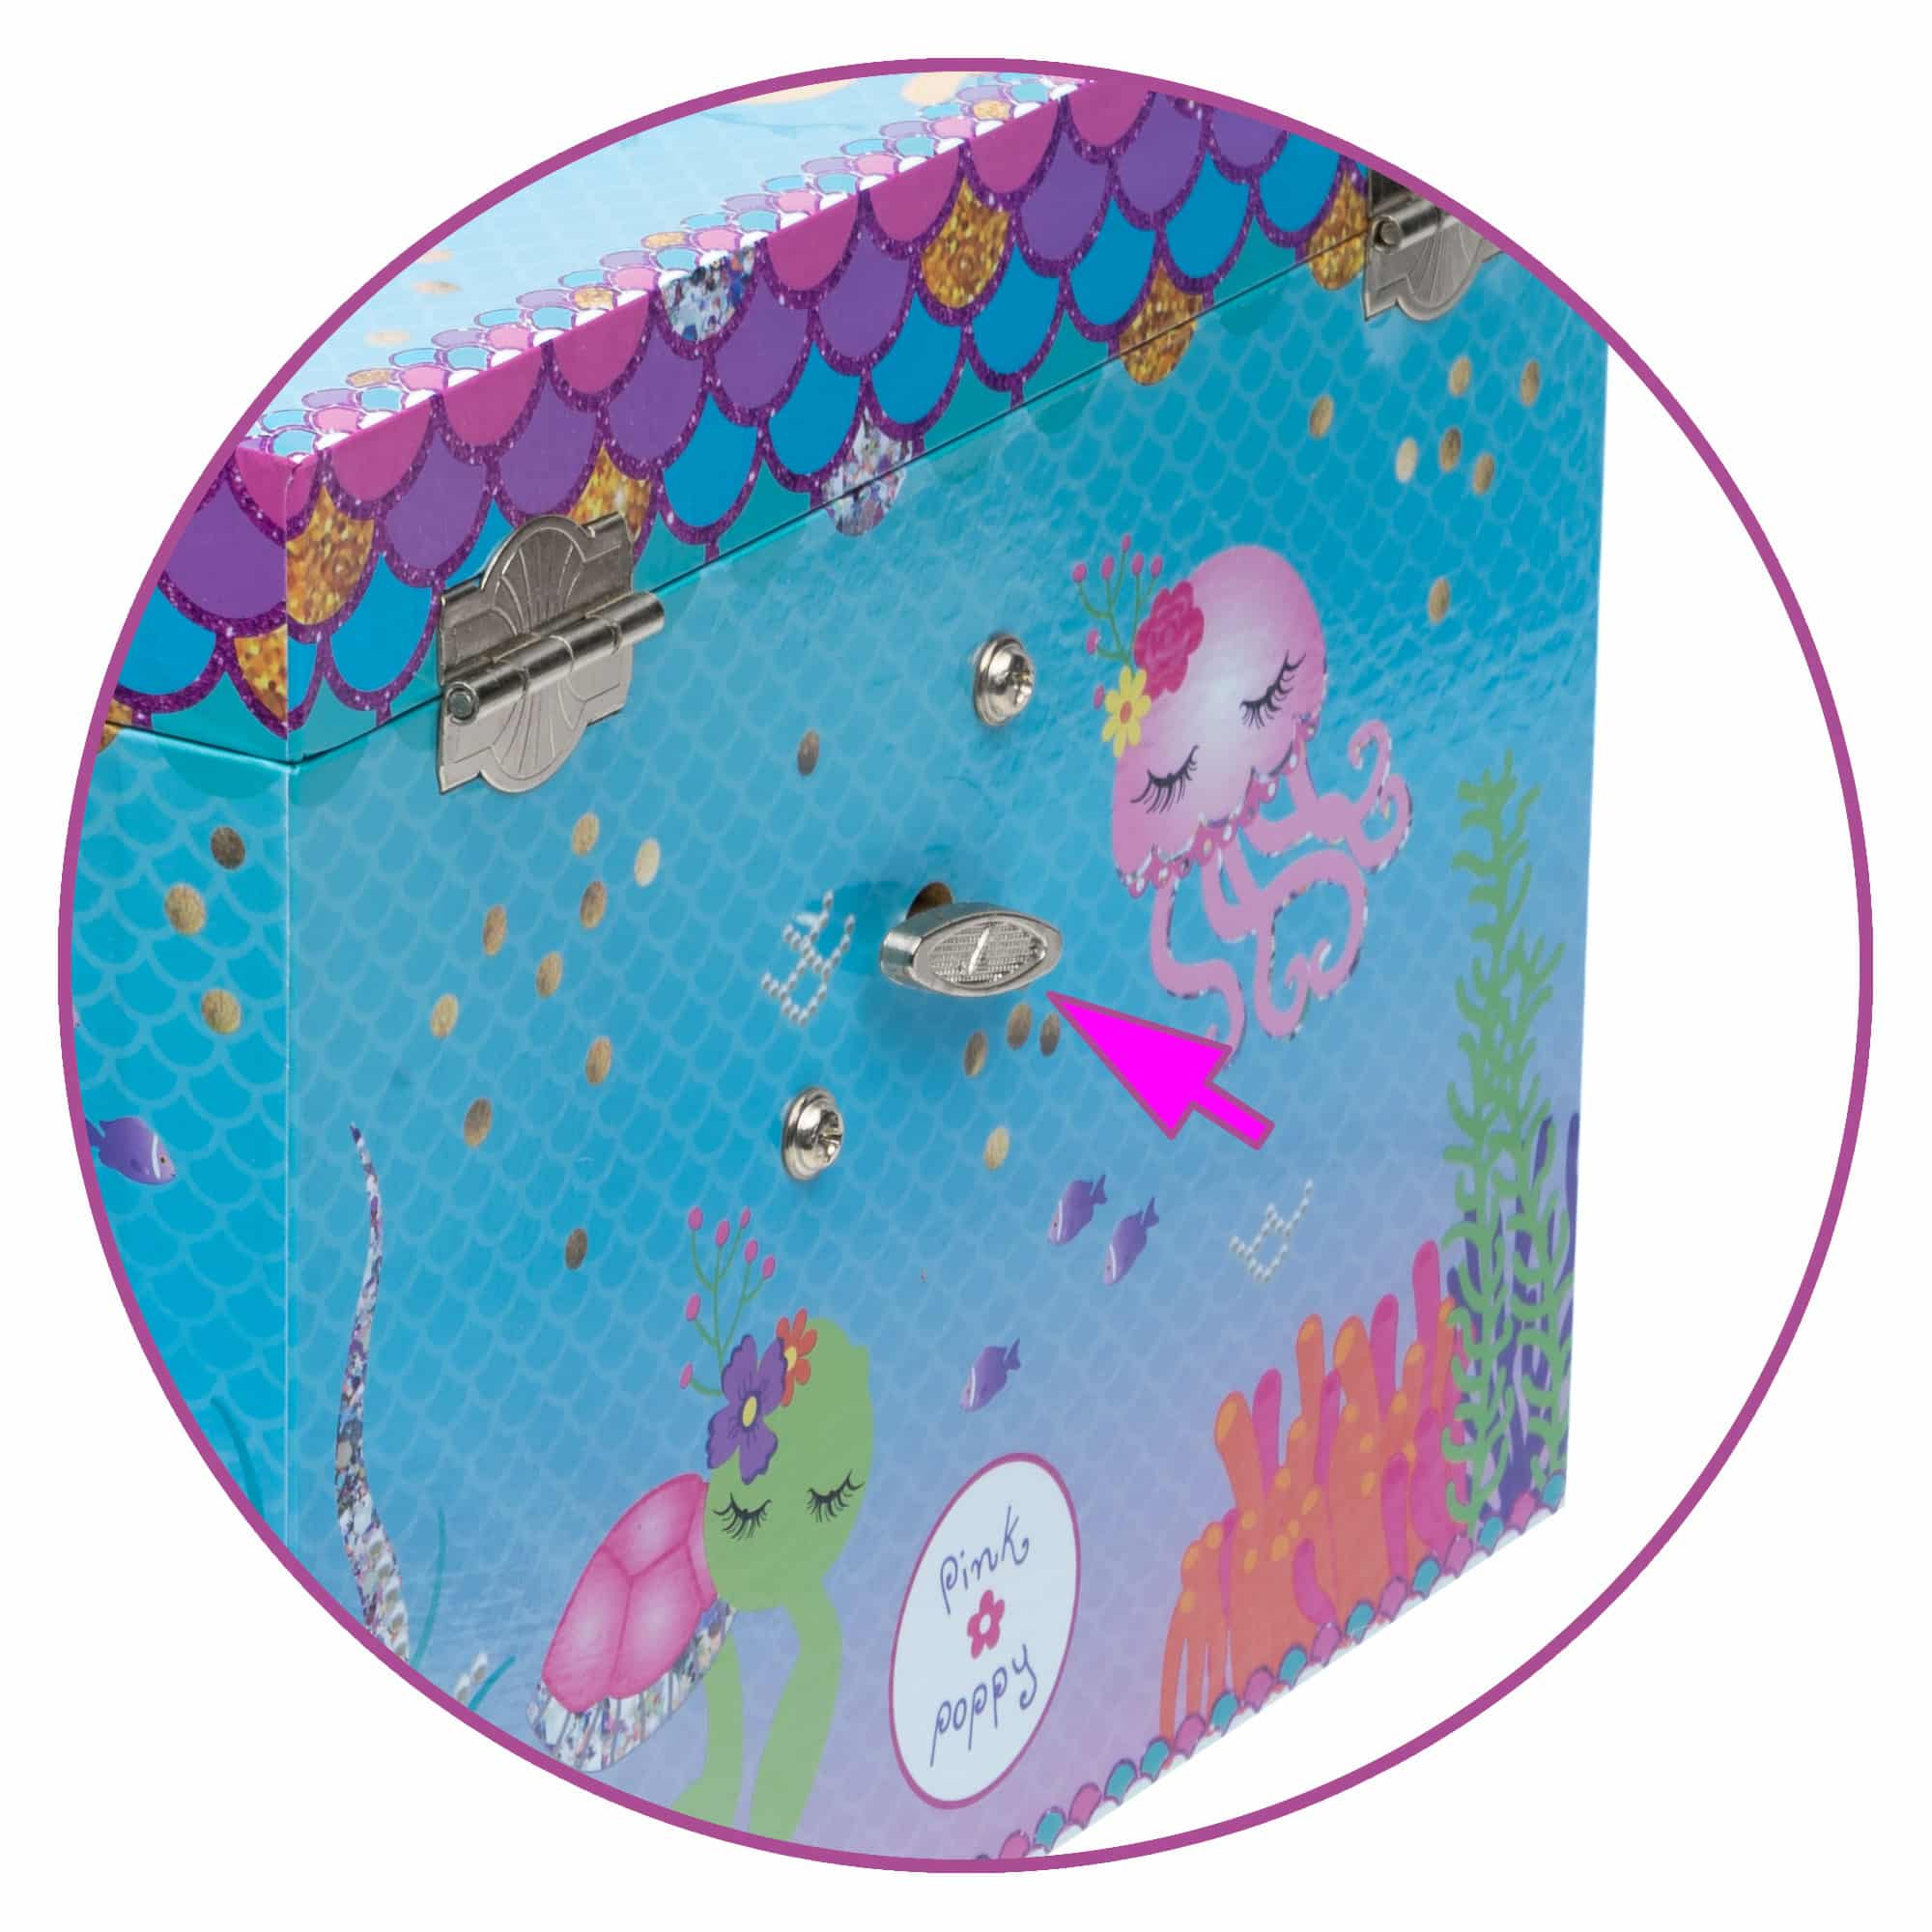 Pink Poppy - Musical Jewellery Box - Under The Sea